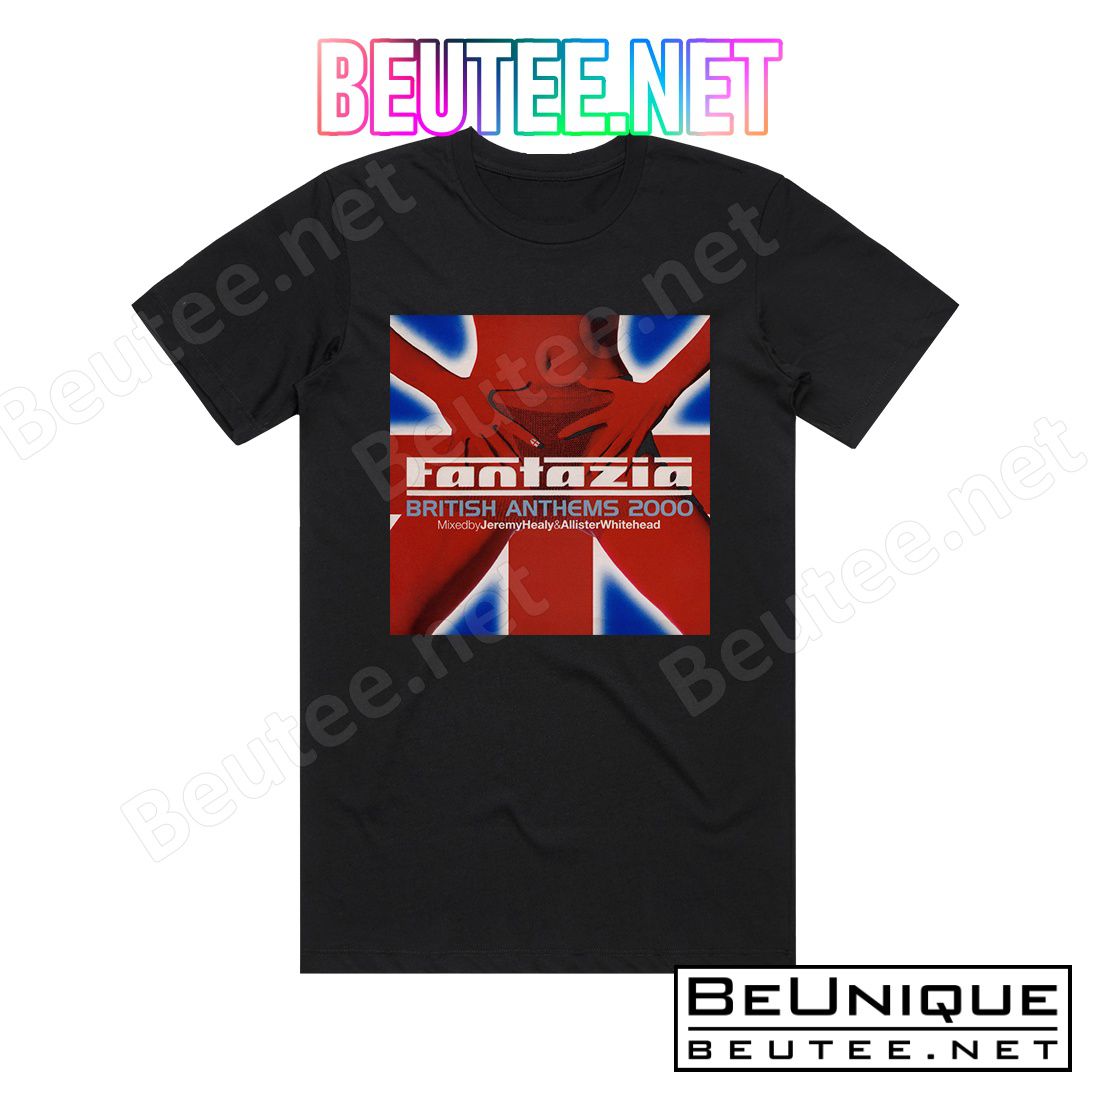 Allister Whitehead Fantazia British Anthems 2000 2 Album Cover T-Shirt